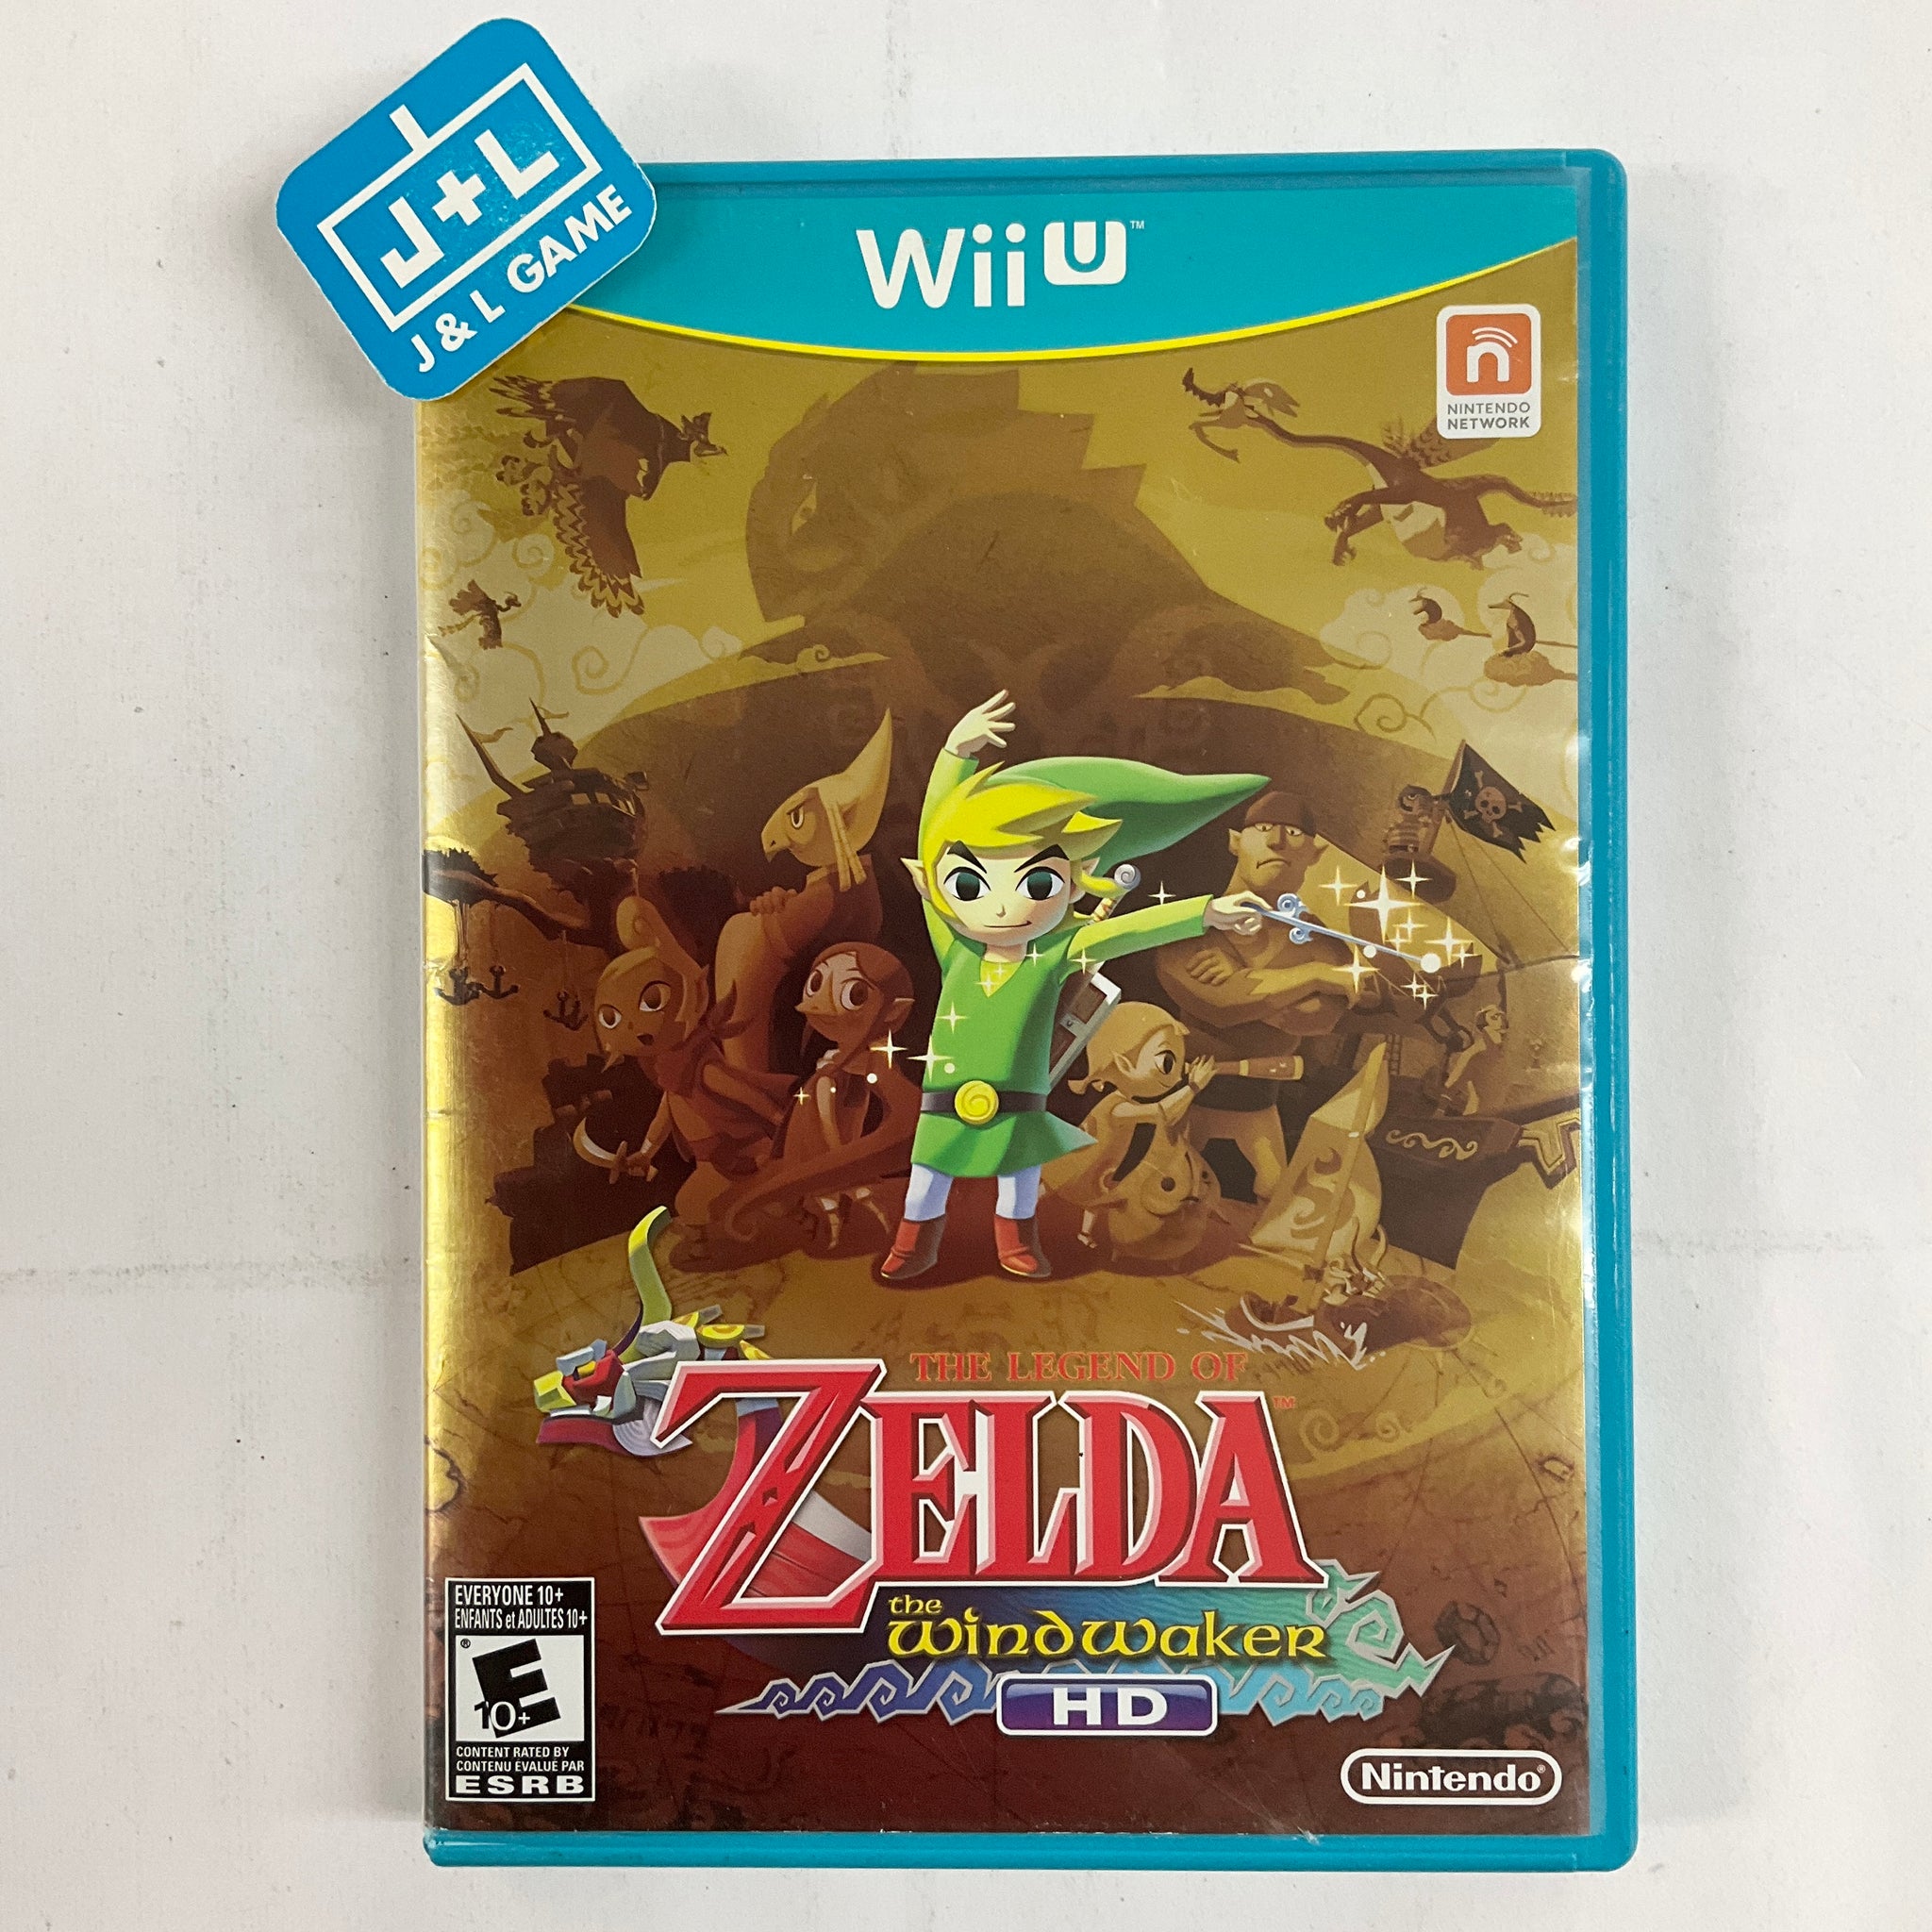 Buy The Legend of Zelda: The Wind Waker HD for WIIU